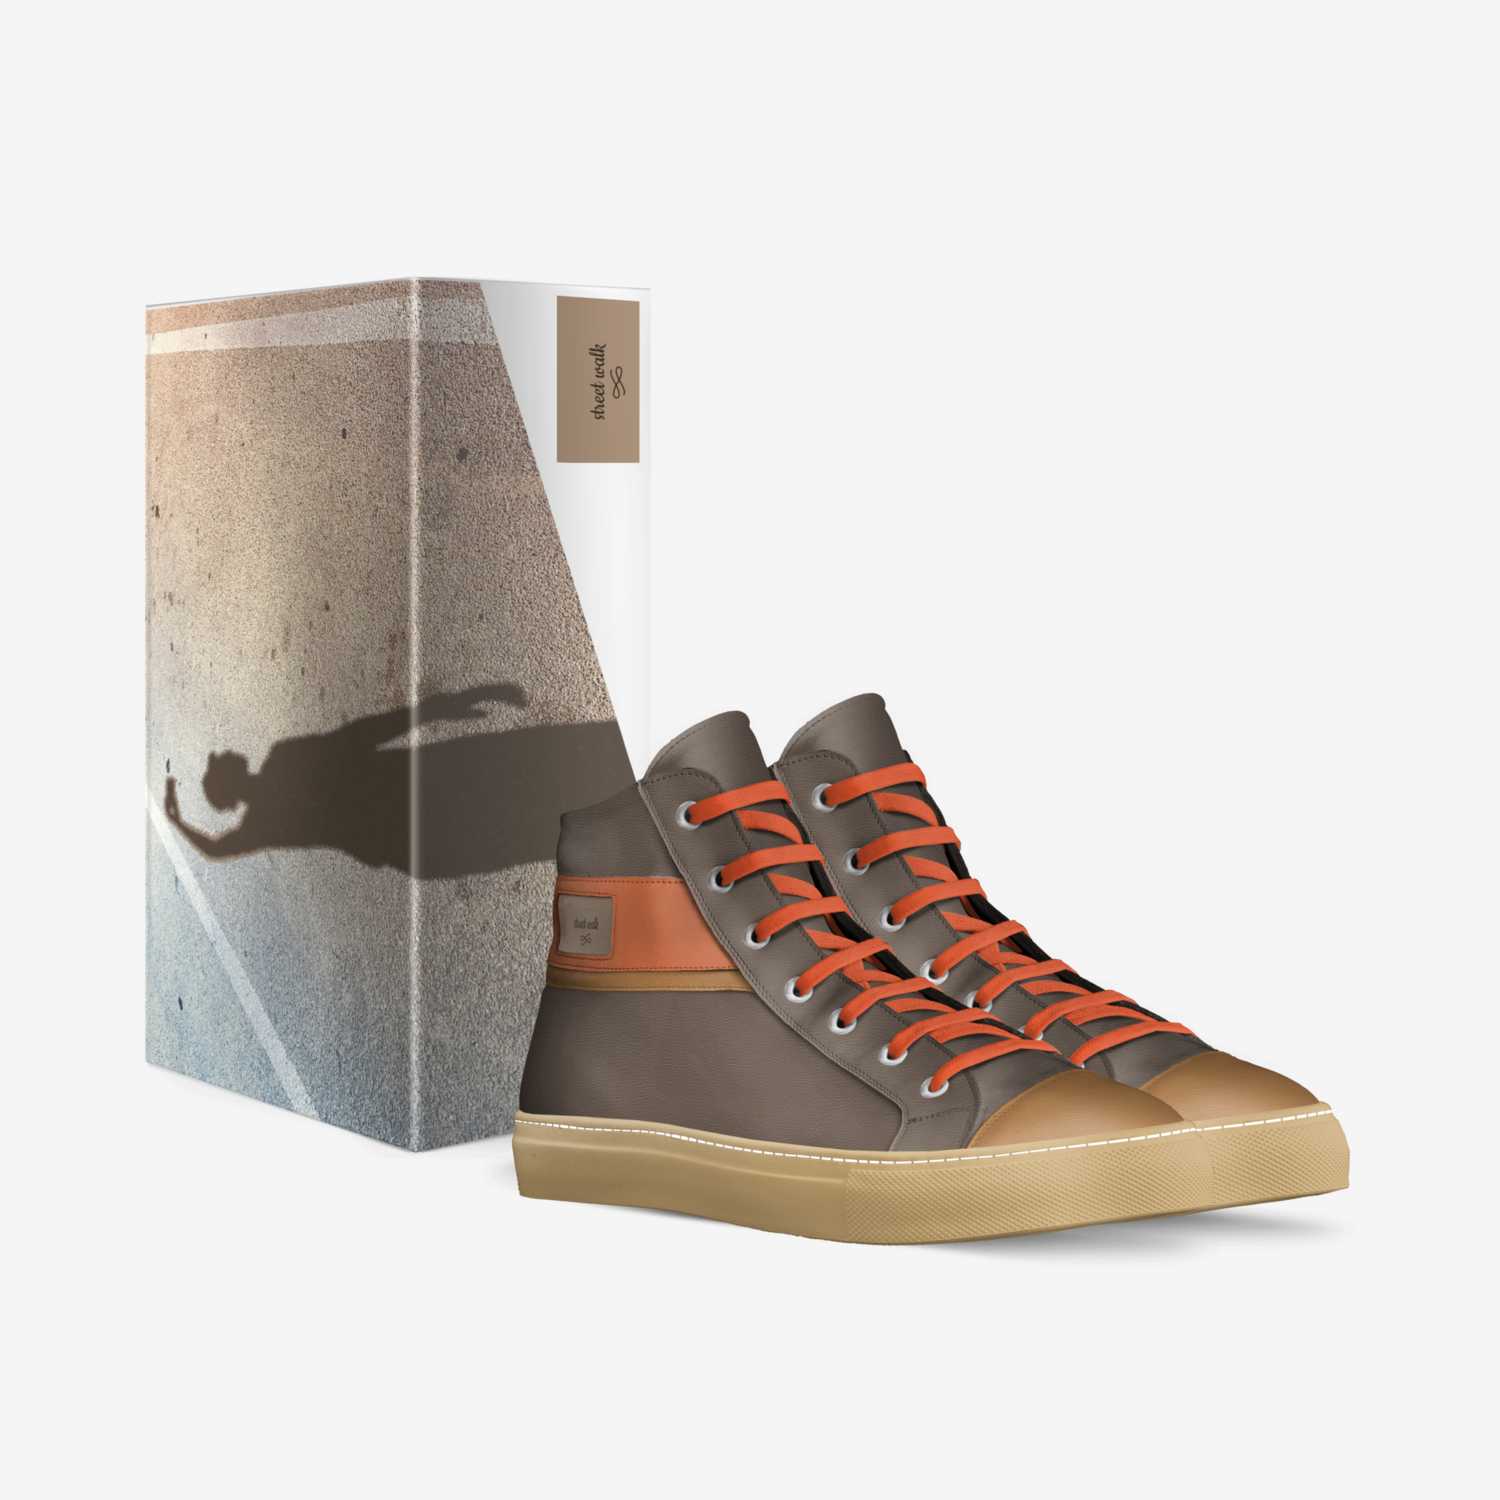 street walk custom made in Italy shoes by Kesha Galiardi | Box view